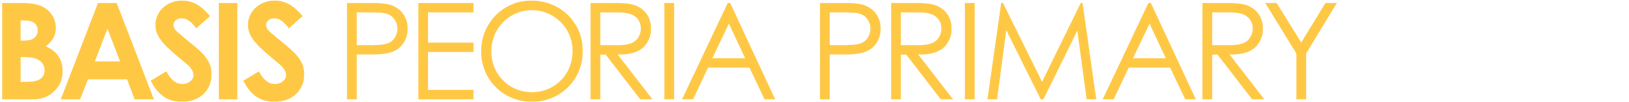 BASIS Peoria Primary text logo